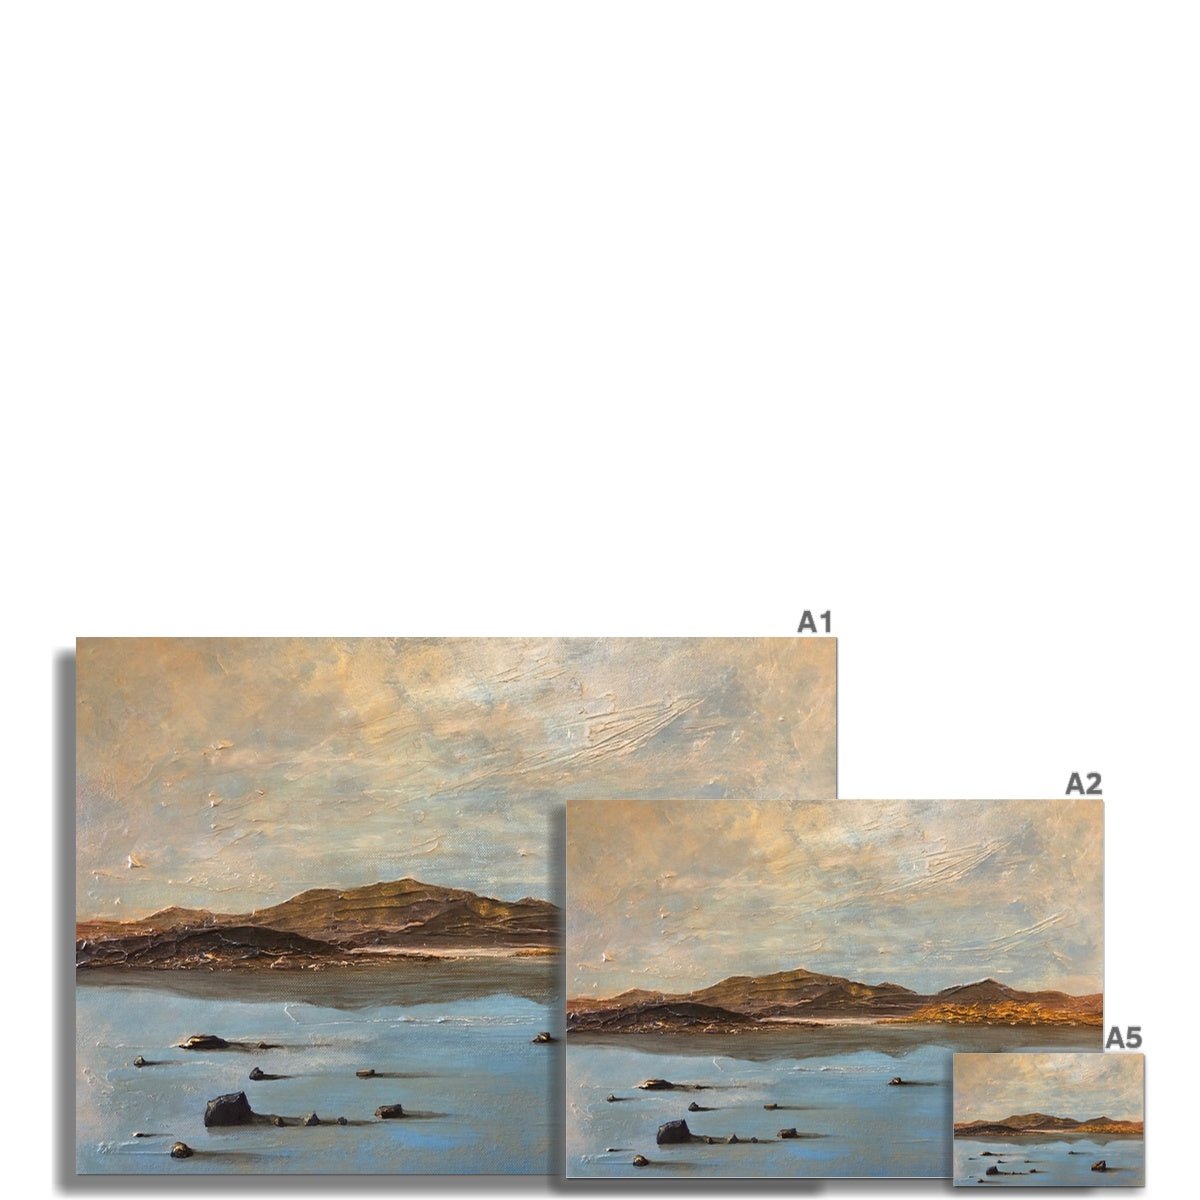 Loch Druidibeg South Uist Painting | Fine Art Prints From Scotland-Unframed Prints-Scottish Lochs Art Gallery-Paintings, Prints, Homeware, Art Gifts From Scotland By Scottish Artist Kevin Hunter